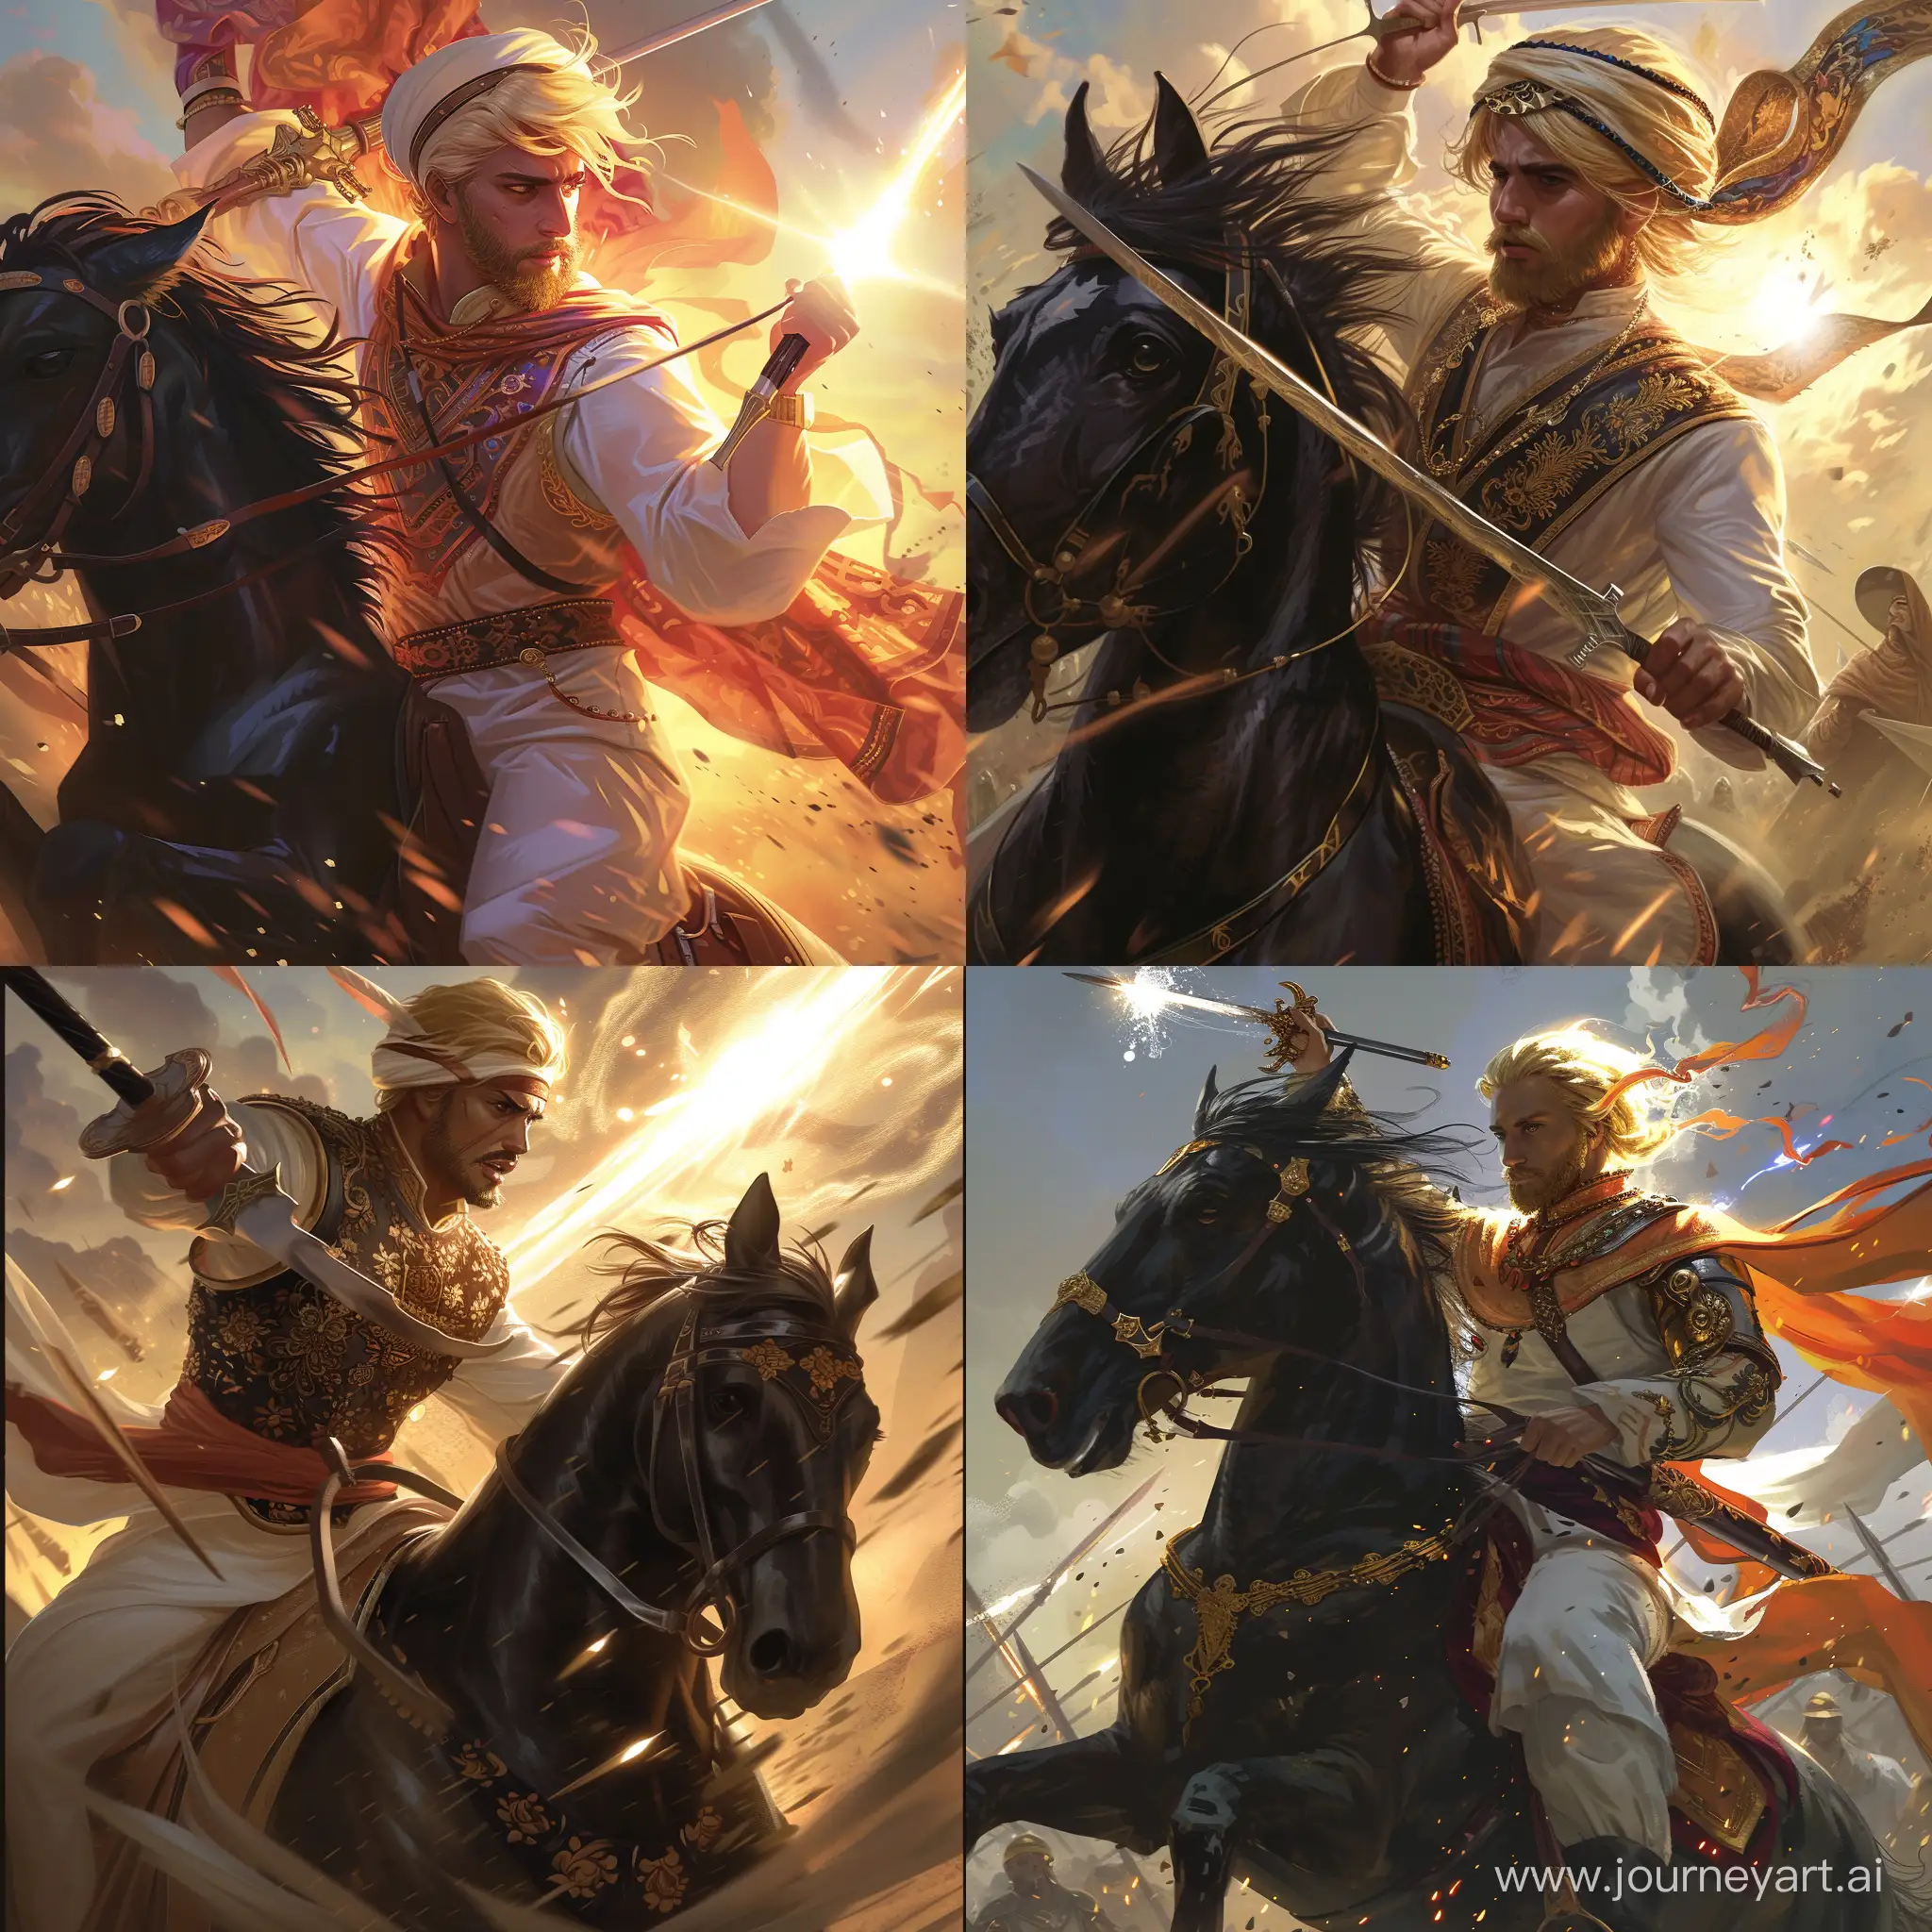 Blonde-Arab-Warrior-Riding-Black-Arabian-Horse-with-Gleaming-Sword-in-Battle